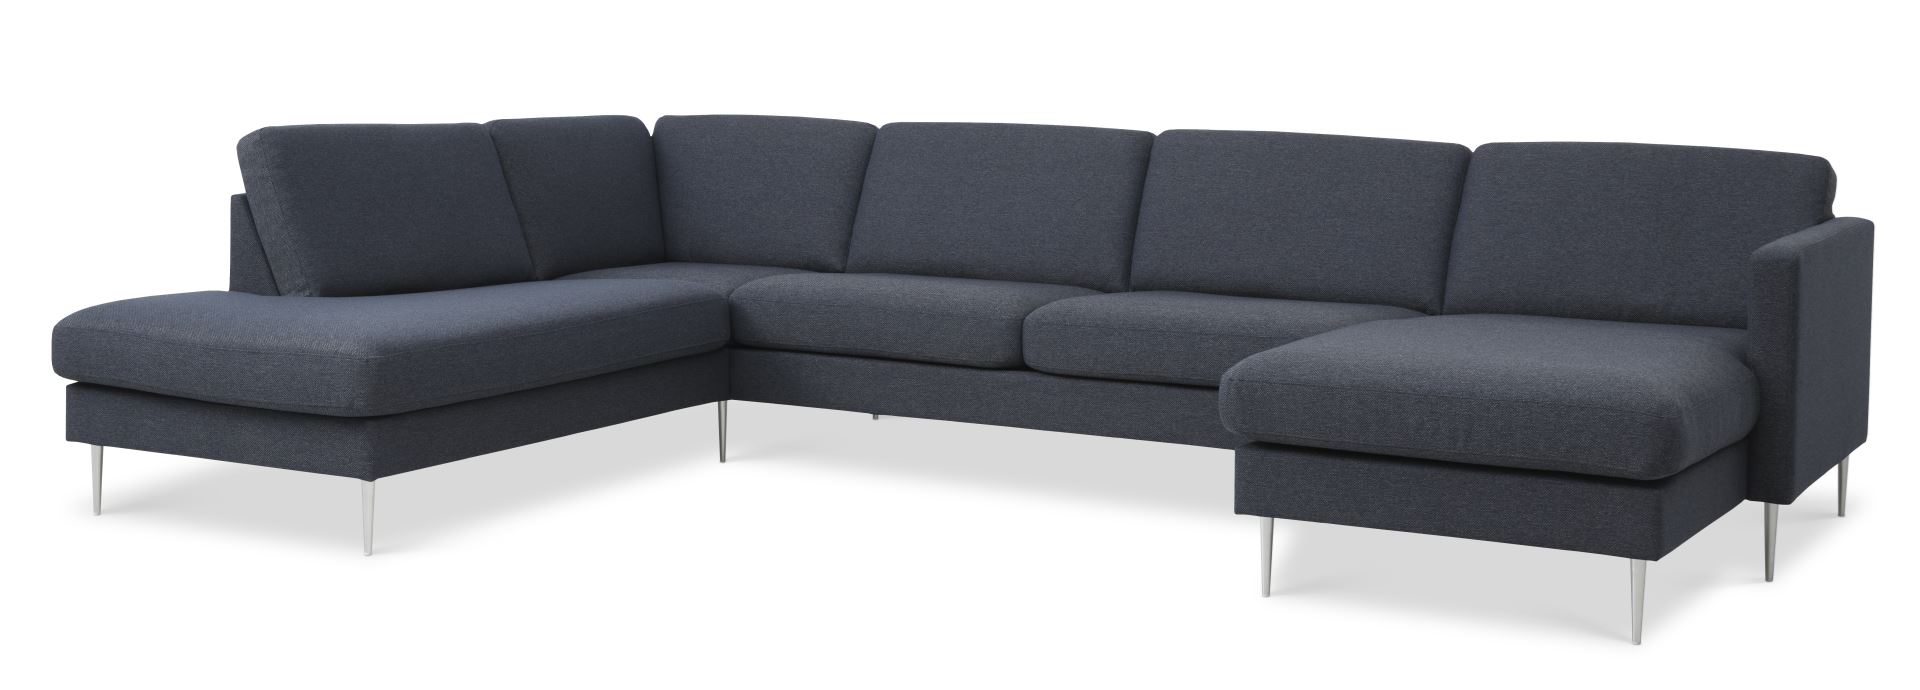 Ask sæt 54 U OE sofa, m. venstre chaiselong - navy blå polyester stof og børstet aluminium